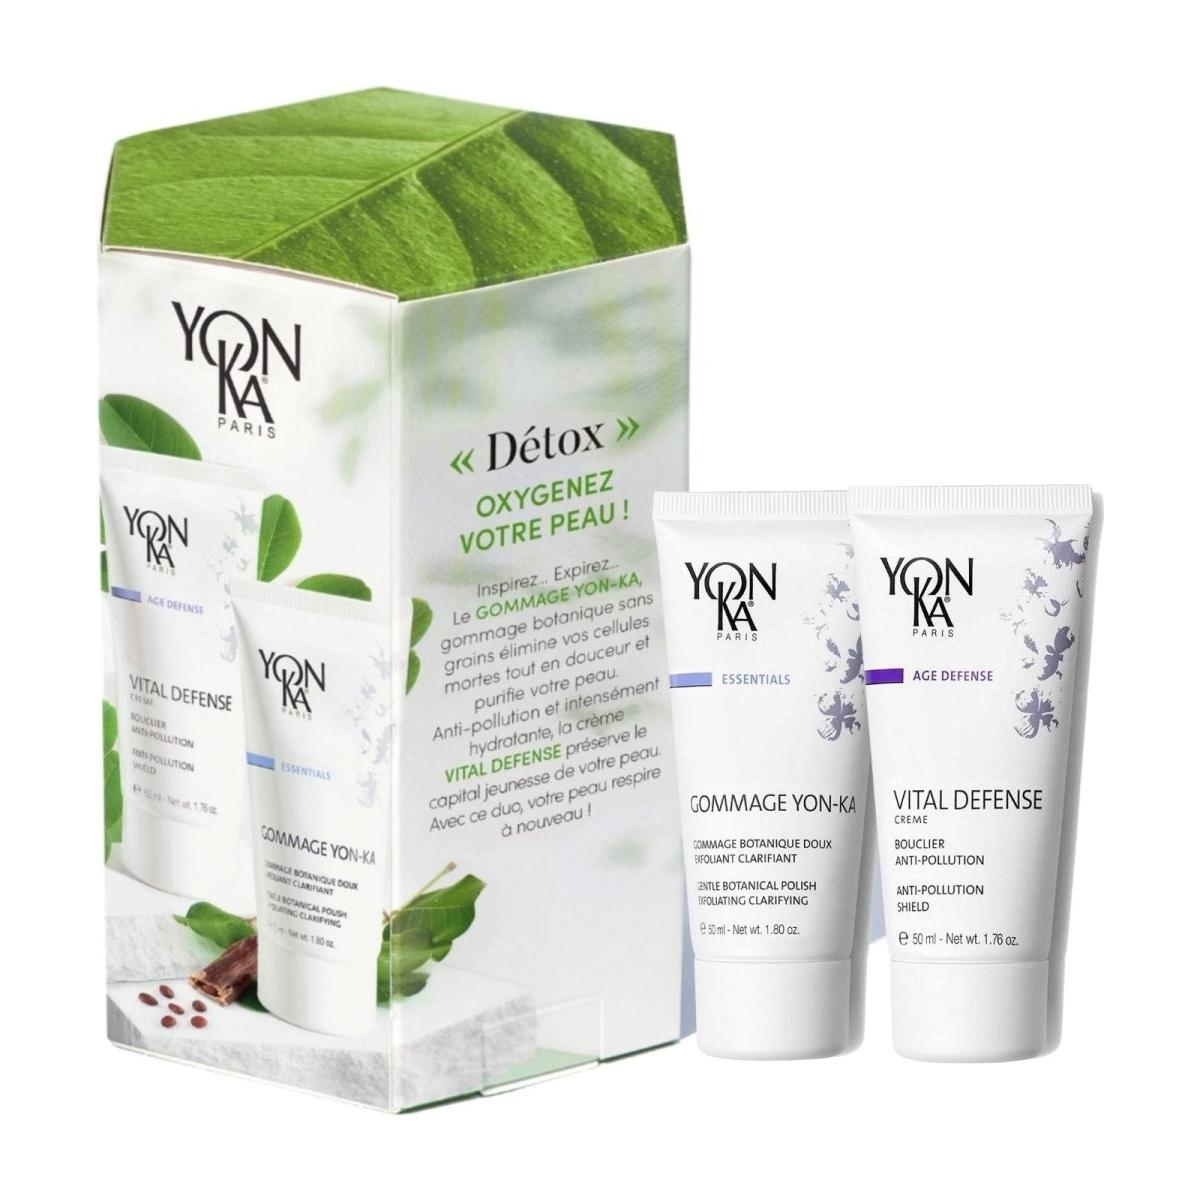 Yonka Paris | Detox Beauty Box - DG International Ventures Limited